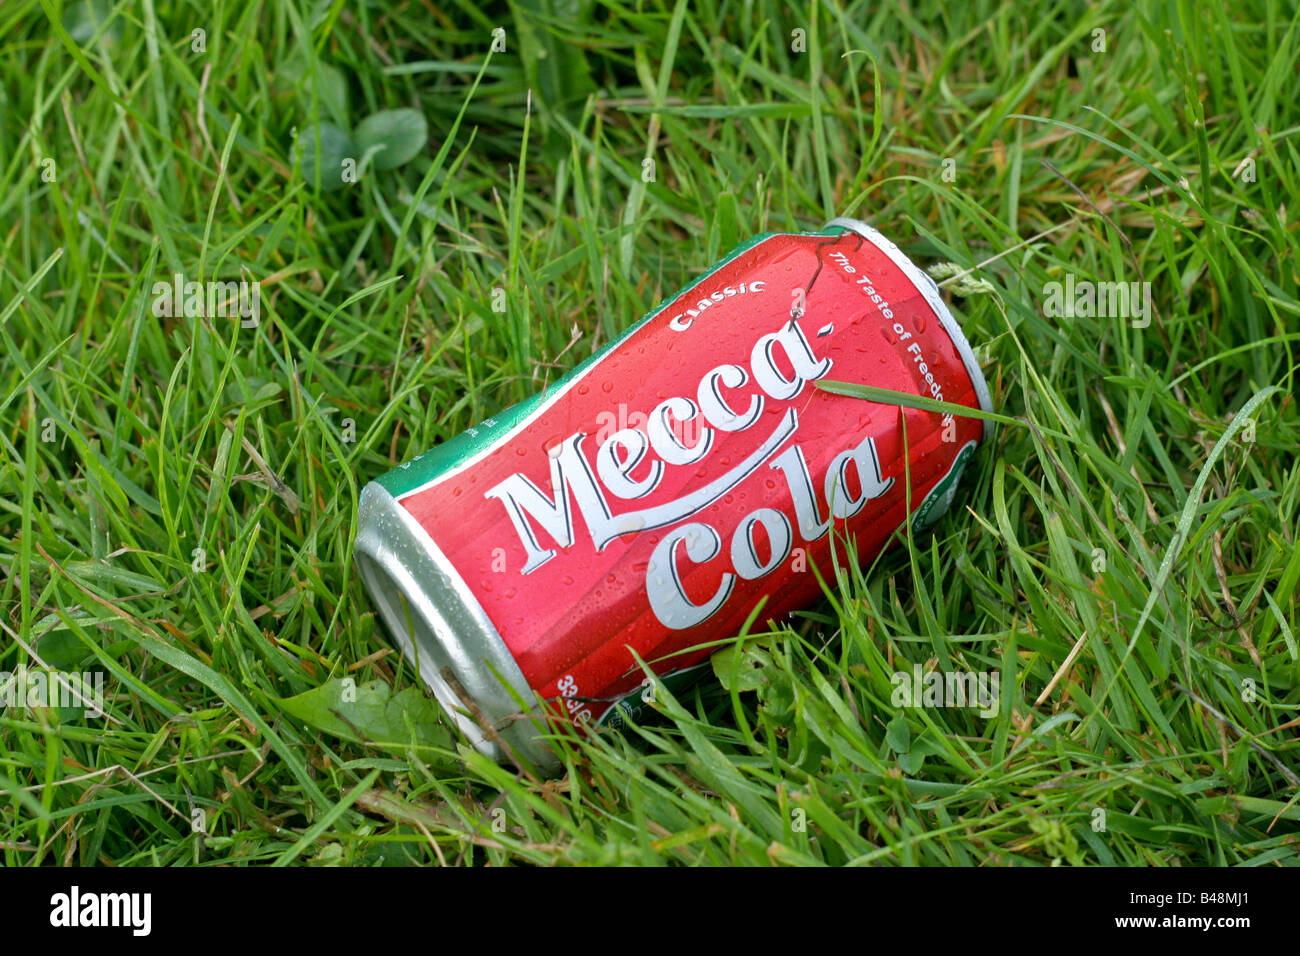 Mecca cola Stock Photo